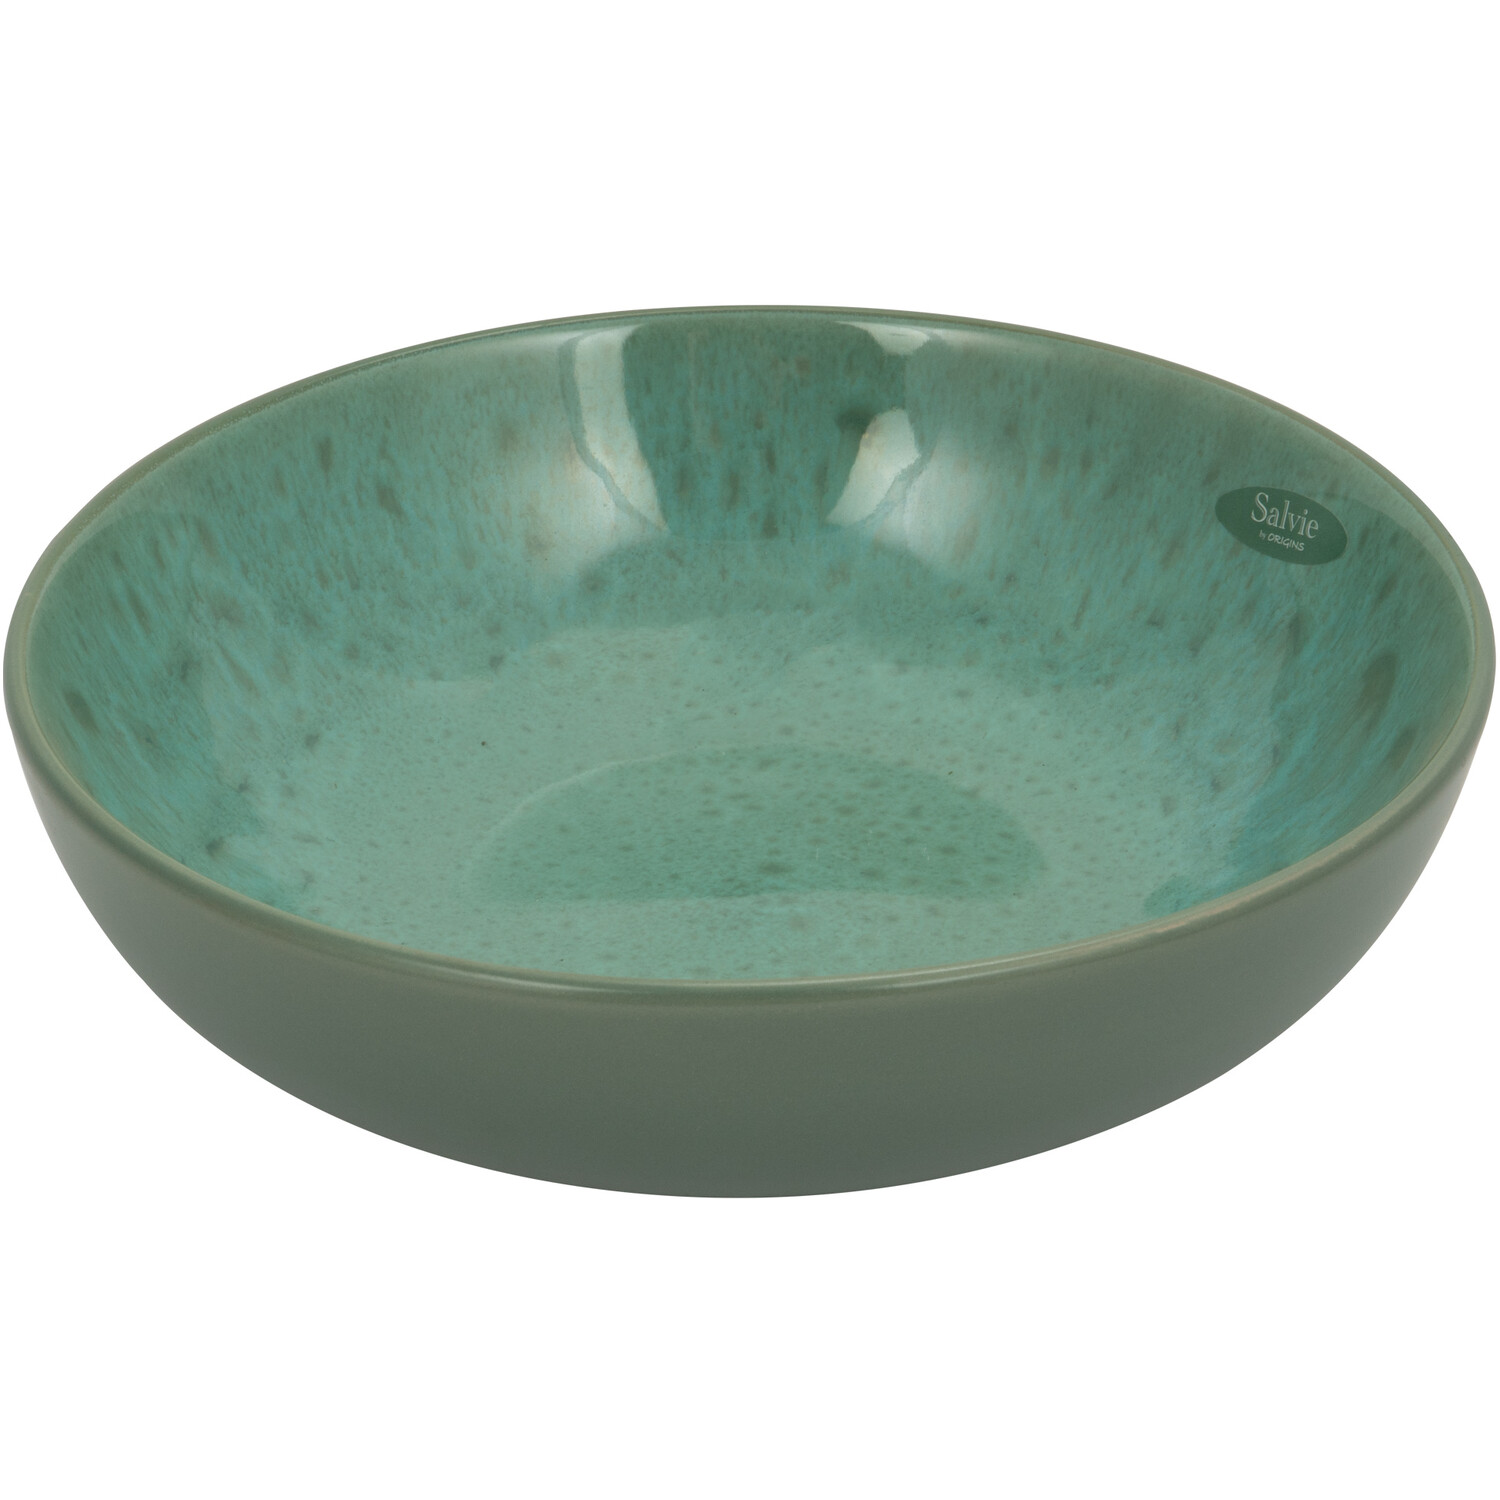 Salvie Reactive Glaze Serving Bowl - Green Image 1